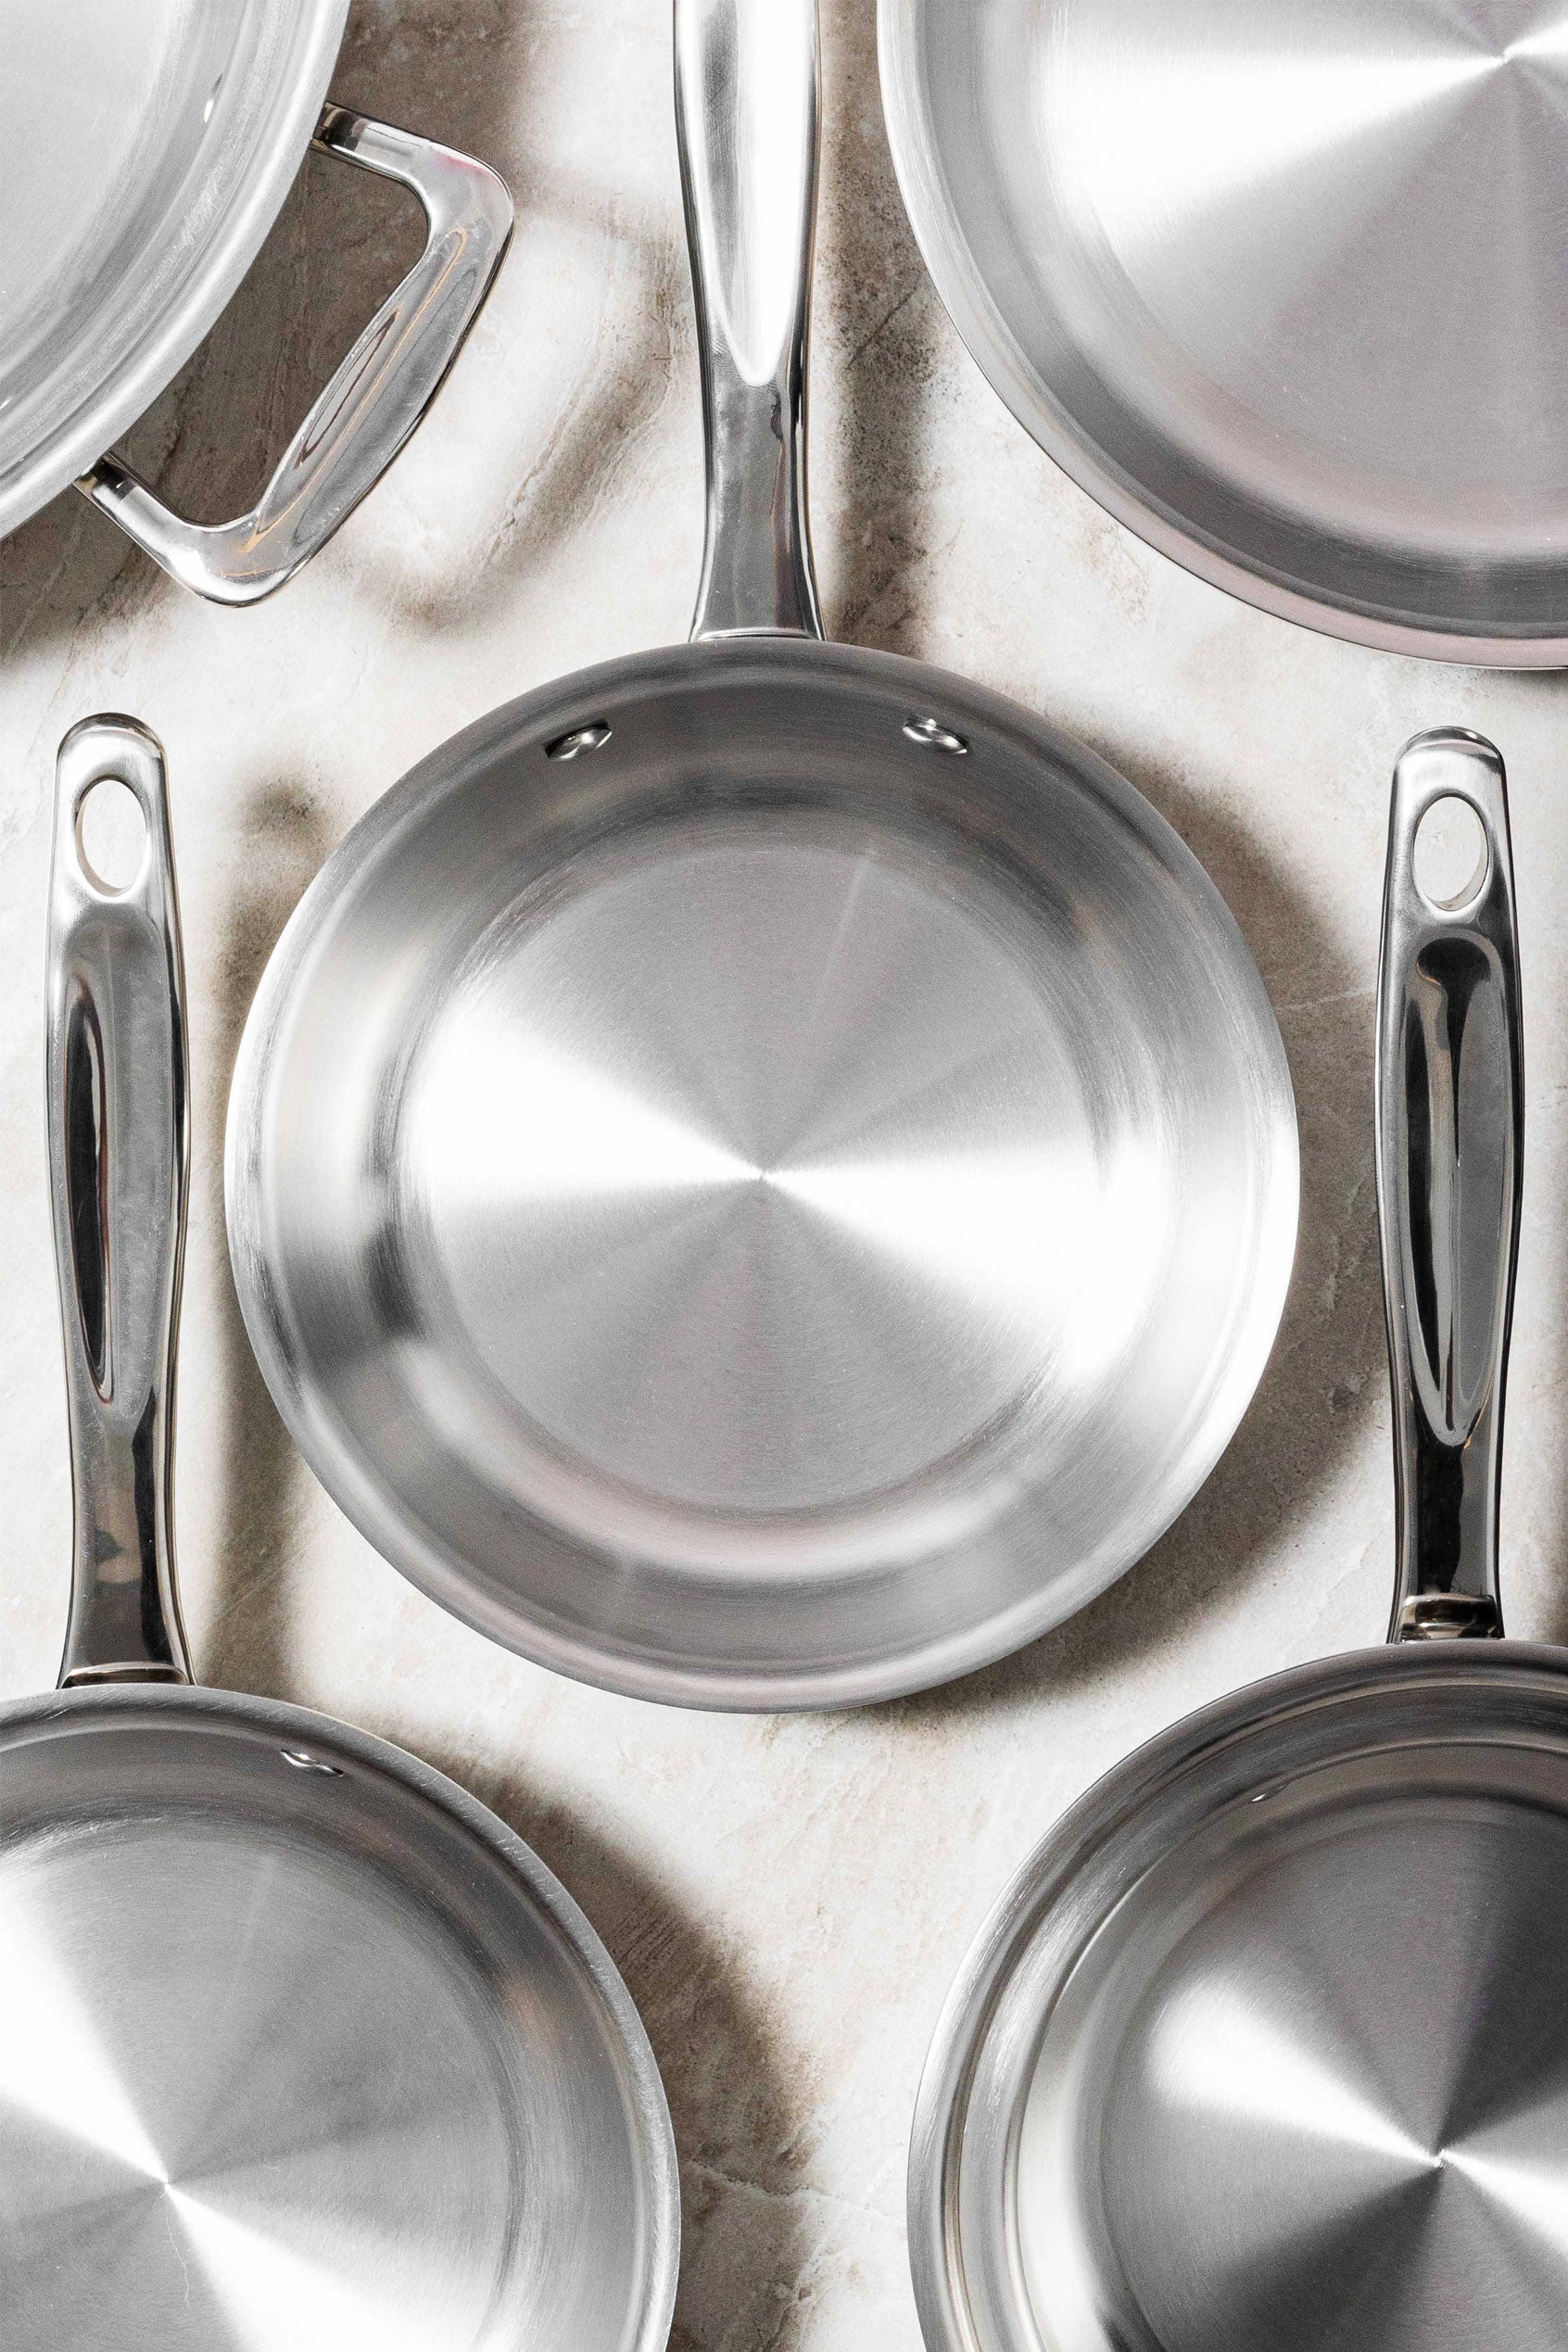 Best Utensils for Stainless Steel Cookware